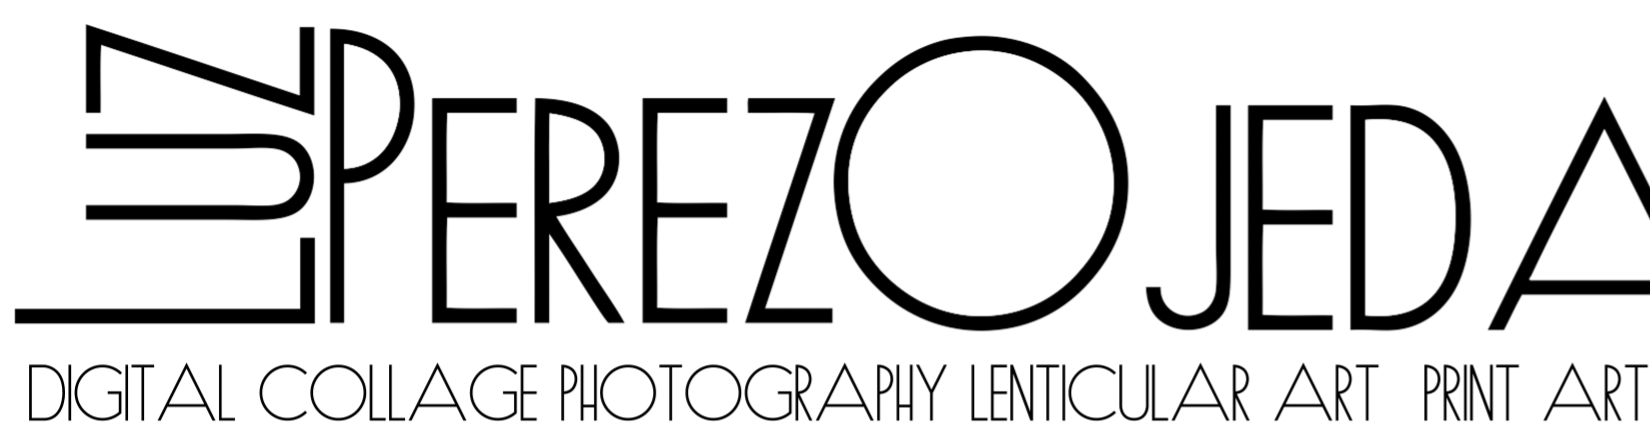 Luz Perez Ojeda Digital collage photography